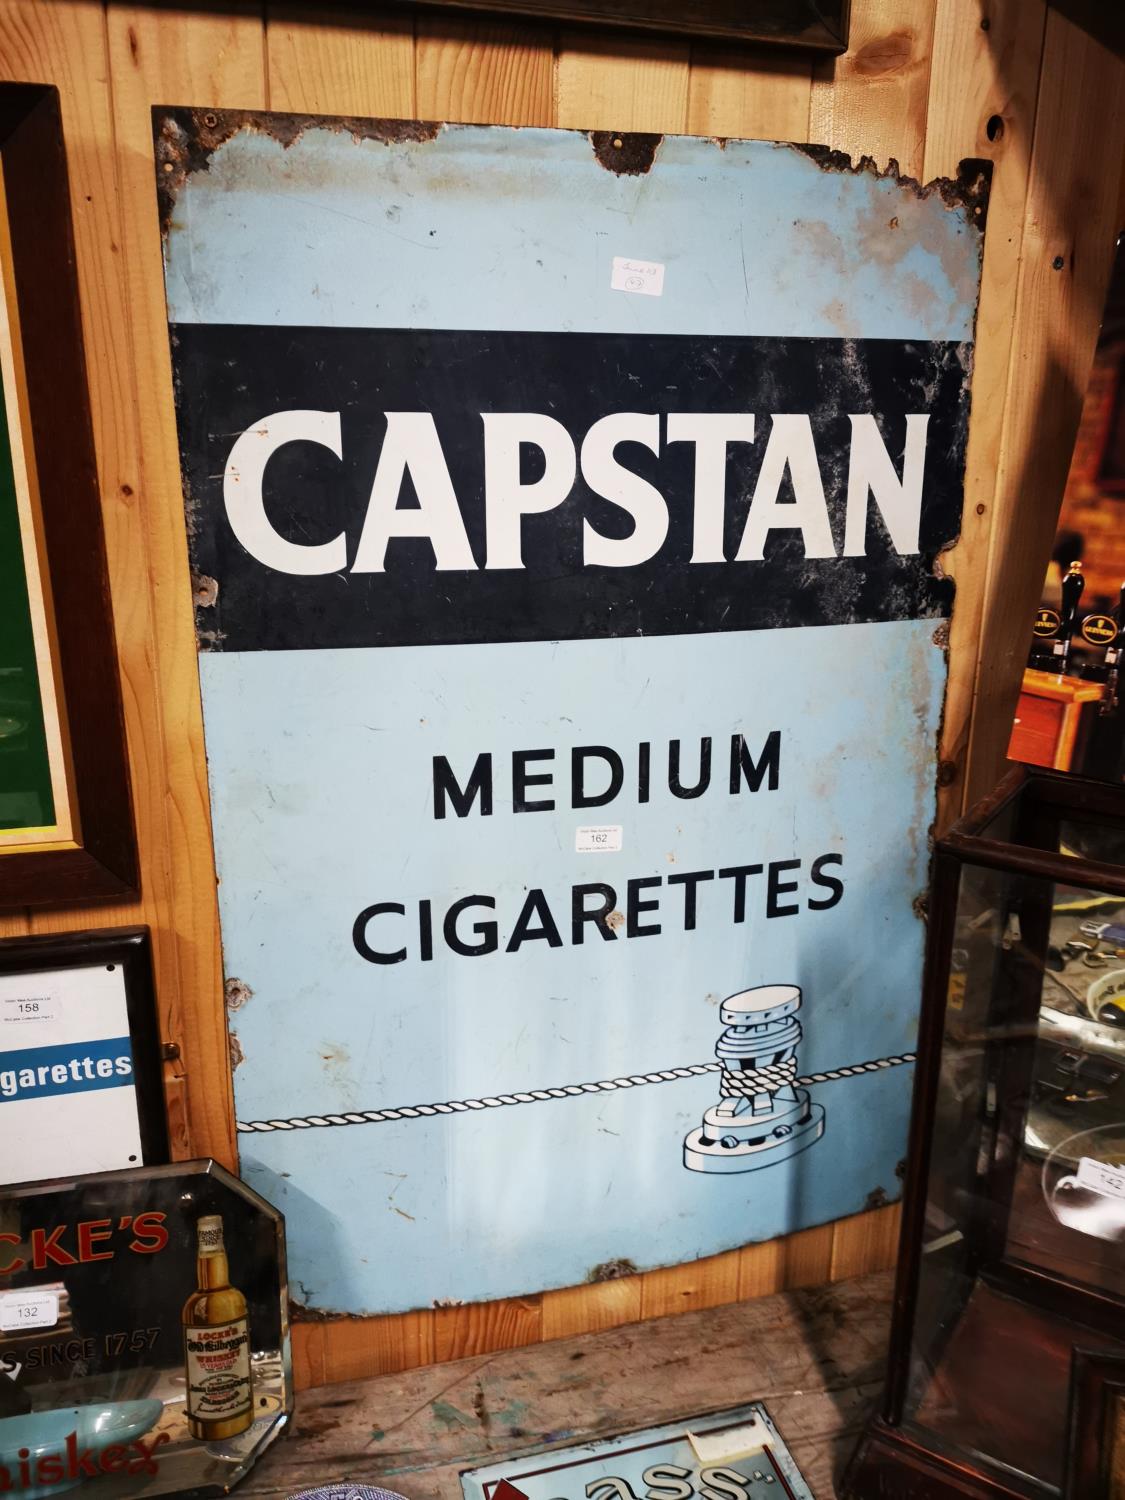 Captan's Medium Cigarettes enamel advertising sign.